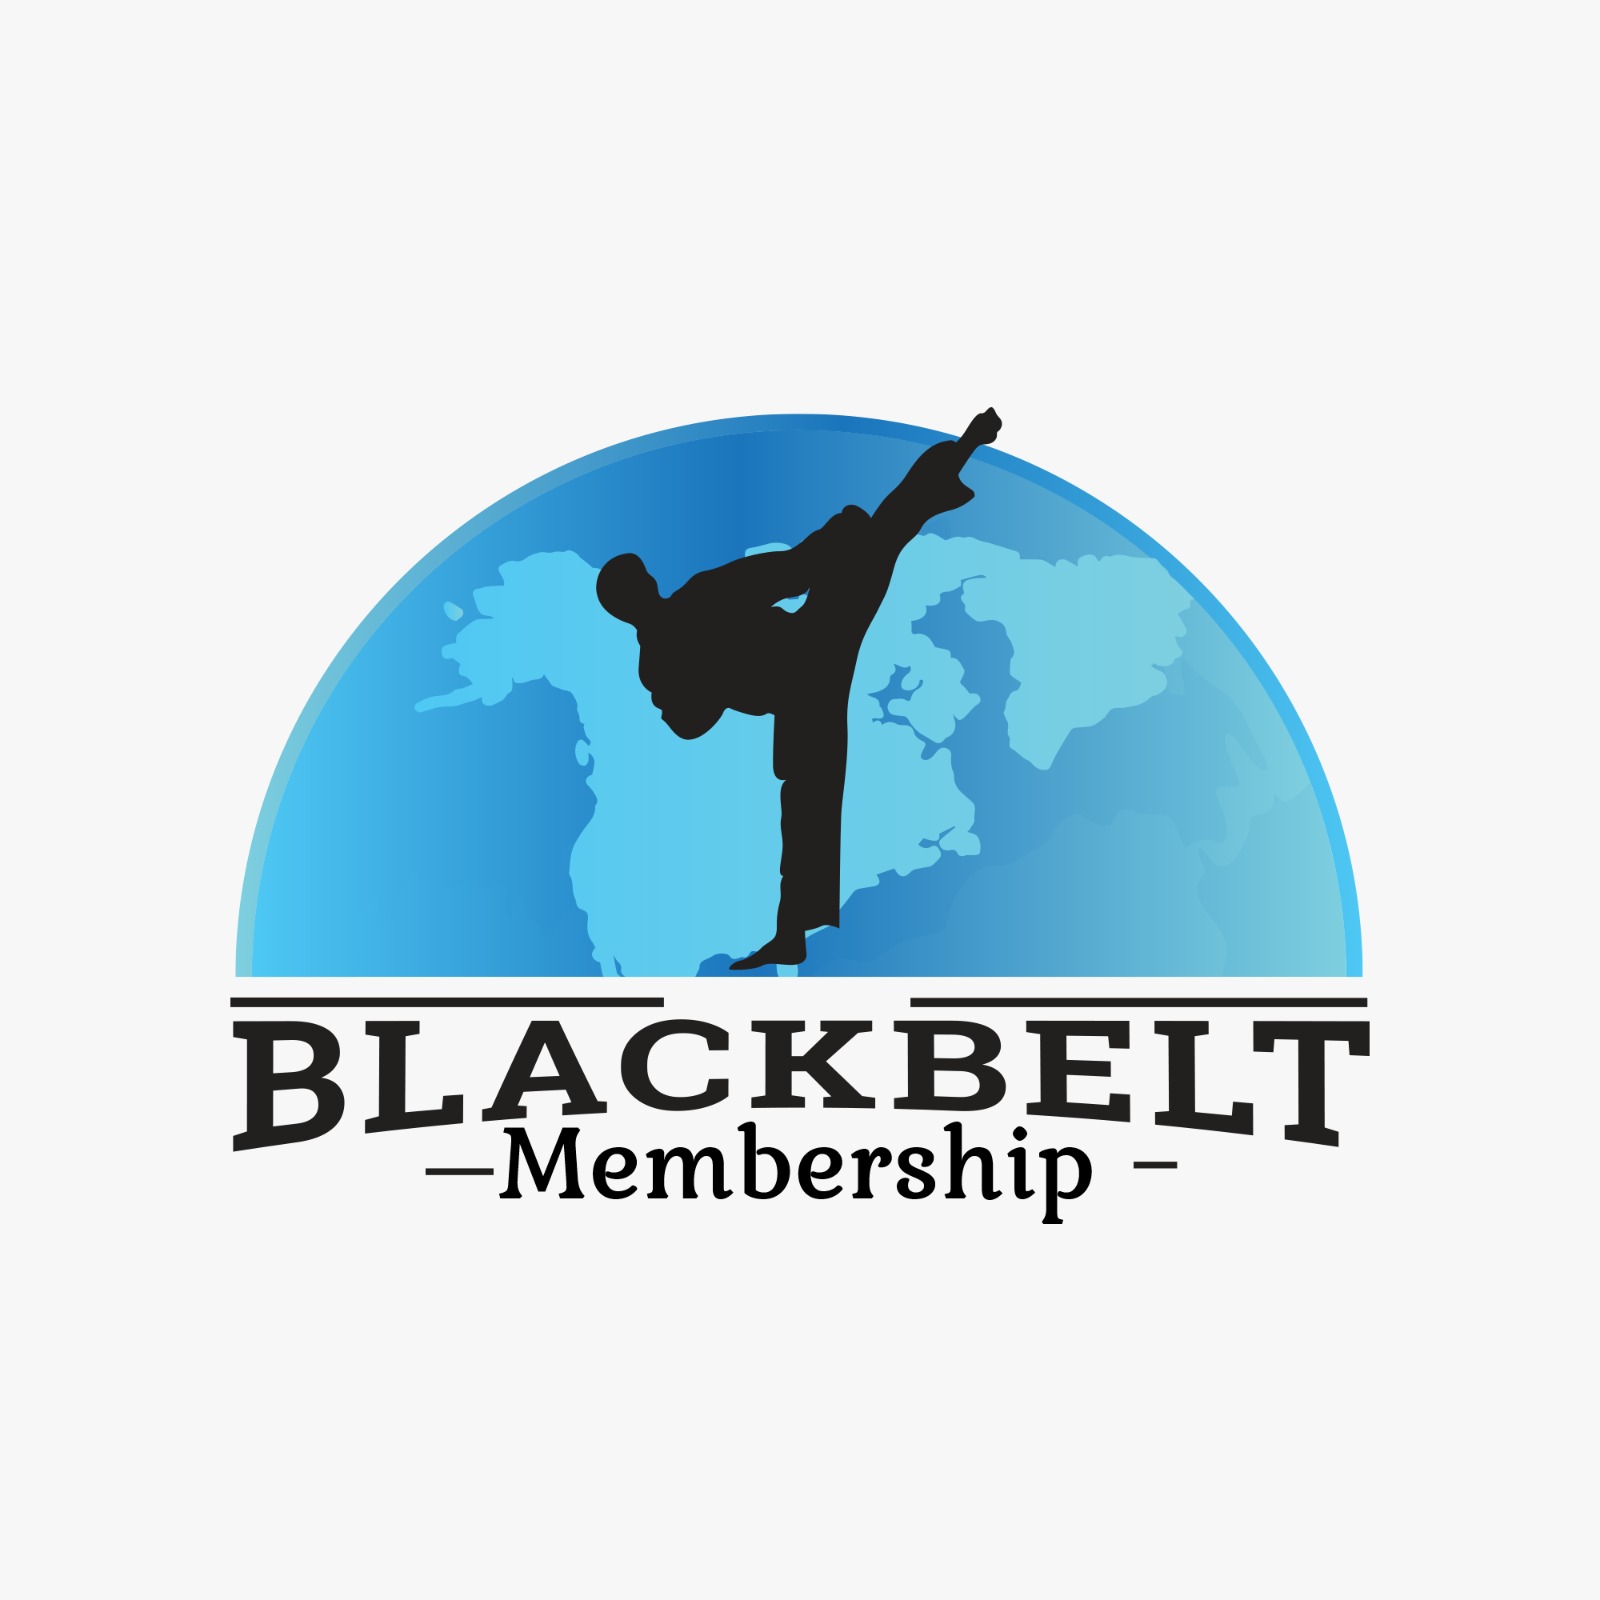 Black Belt Membership Software Helps Launch Martial Arts Schools into the Industry